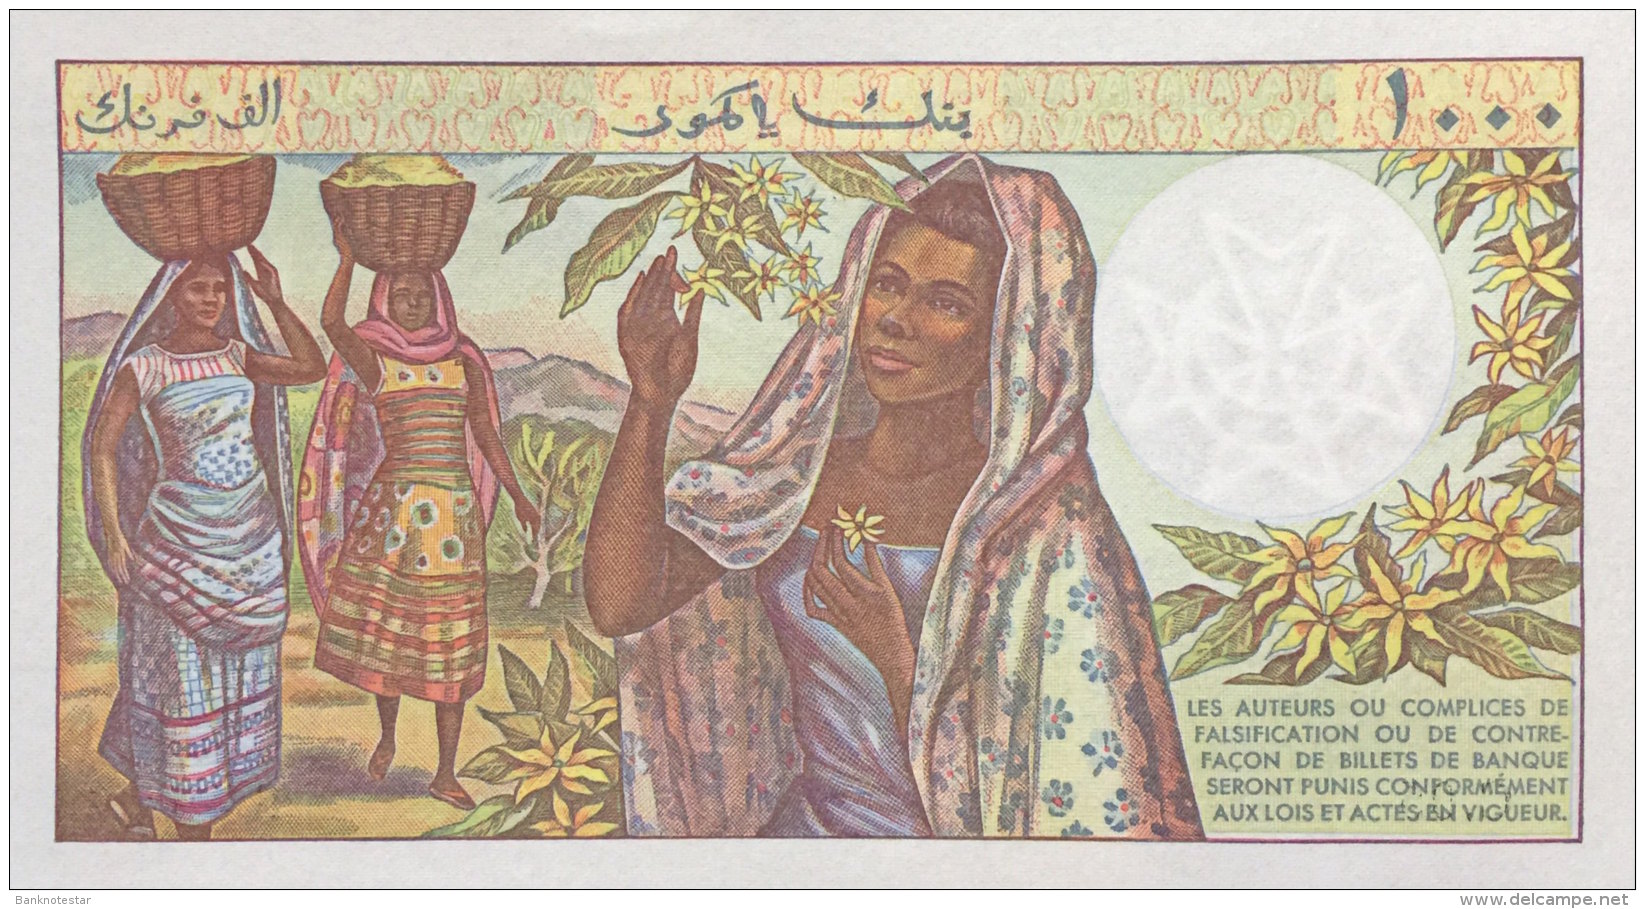 Comoros 1.000 Francs, P-11b 1994 UNC - Comoros